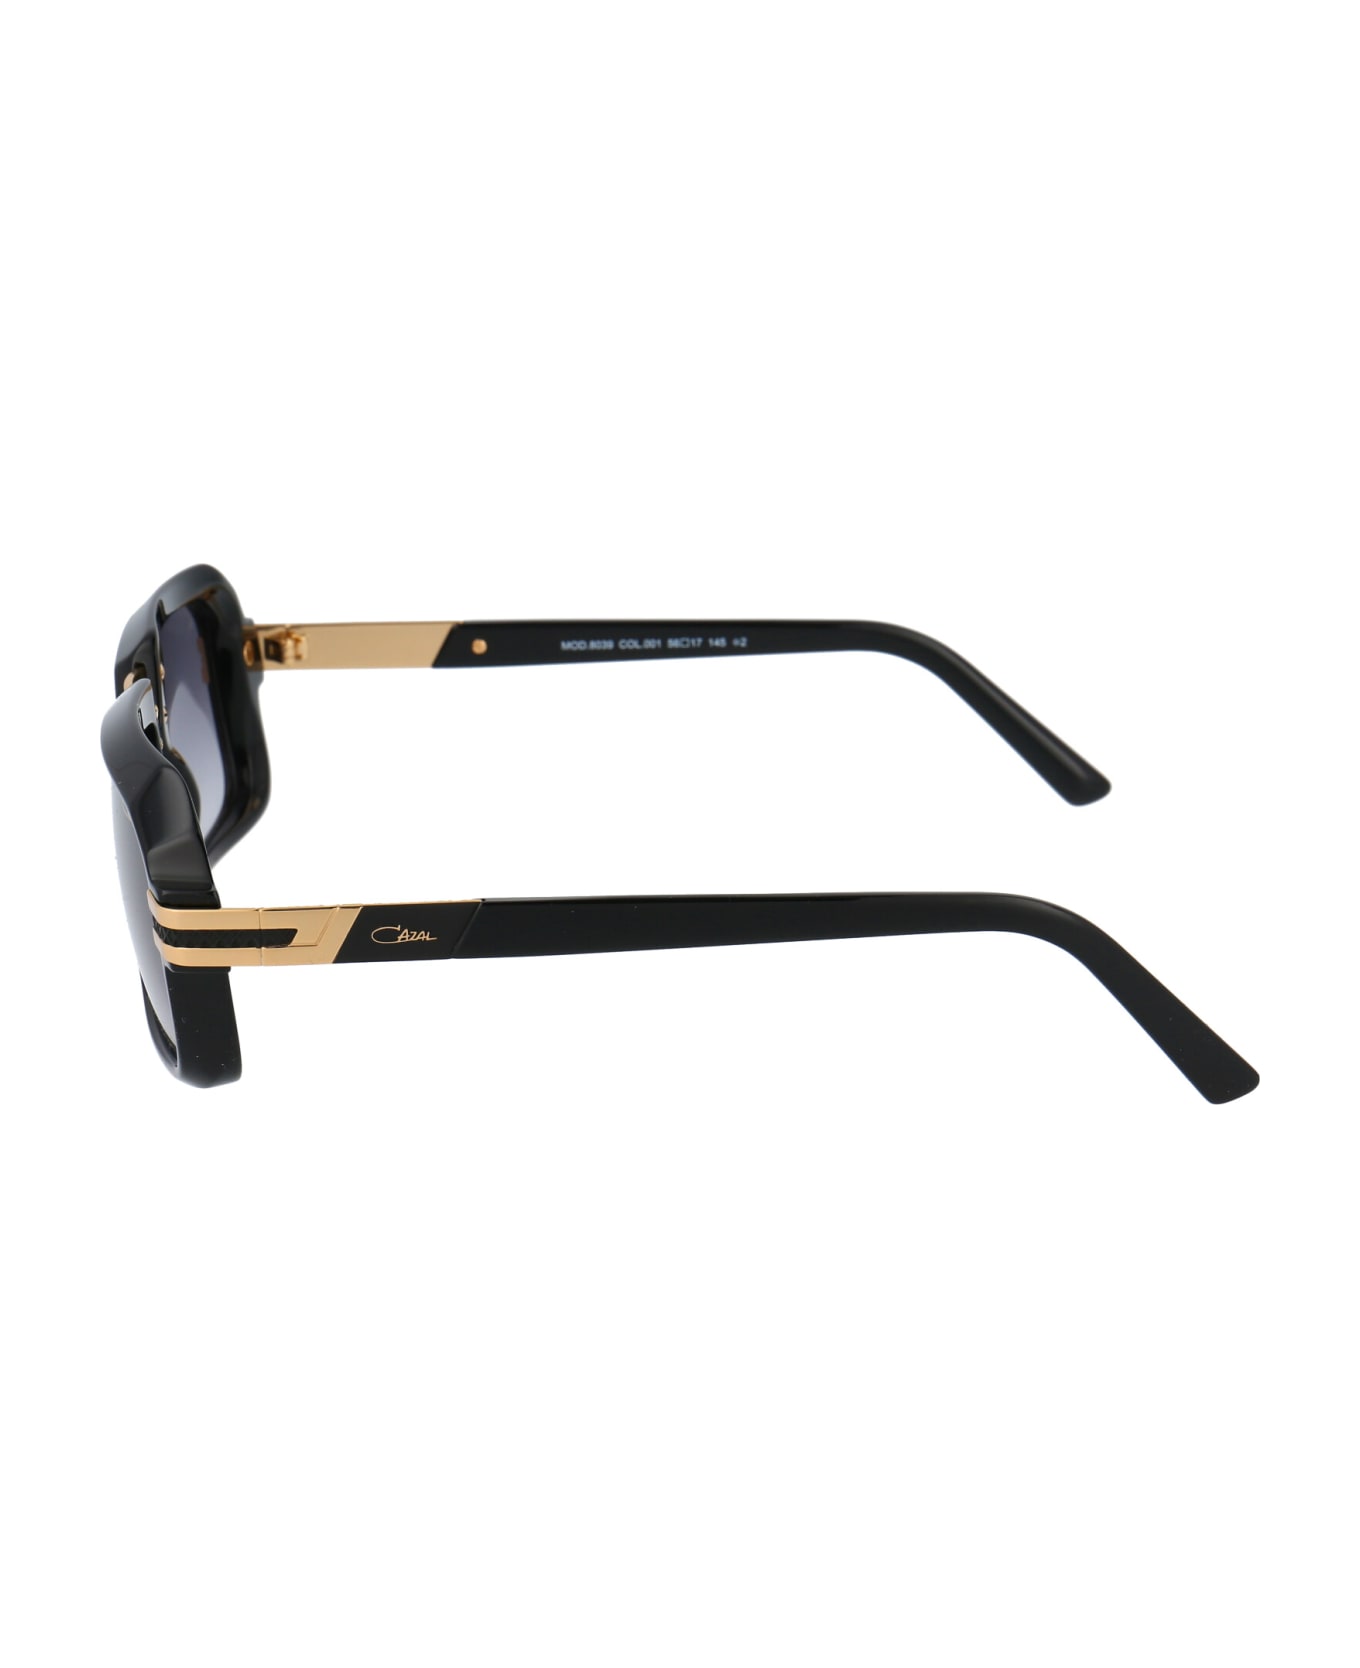 Cazal Mod. 8039 Sunglasses - BLACK サングラス